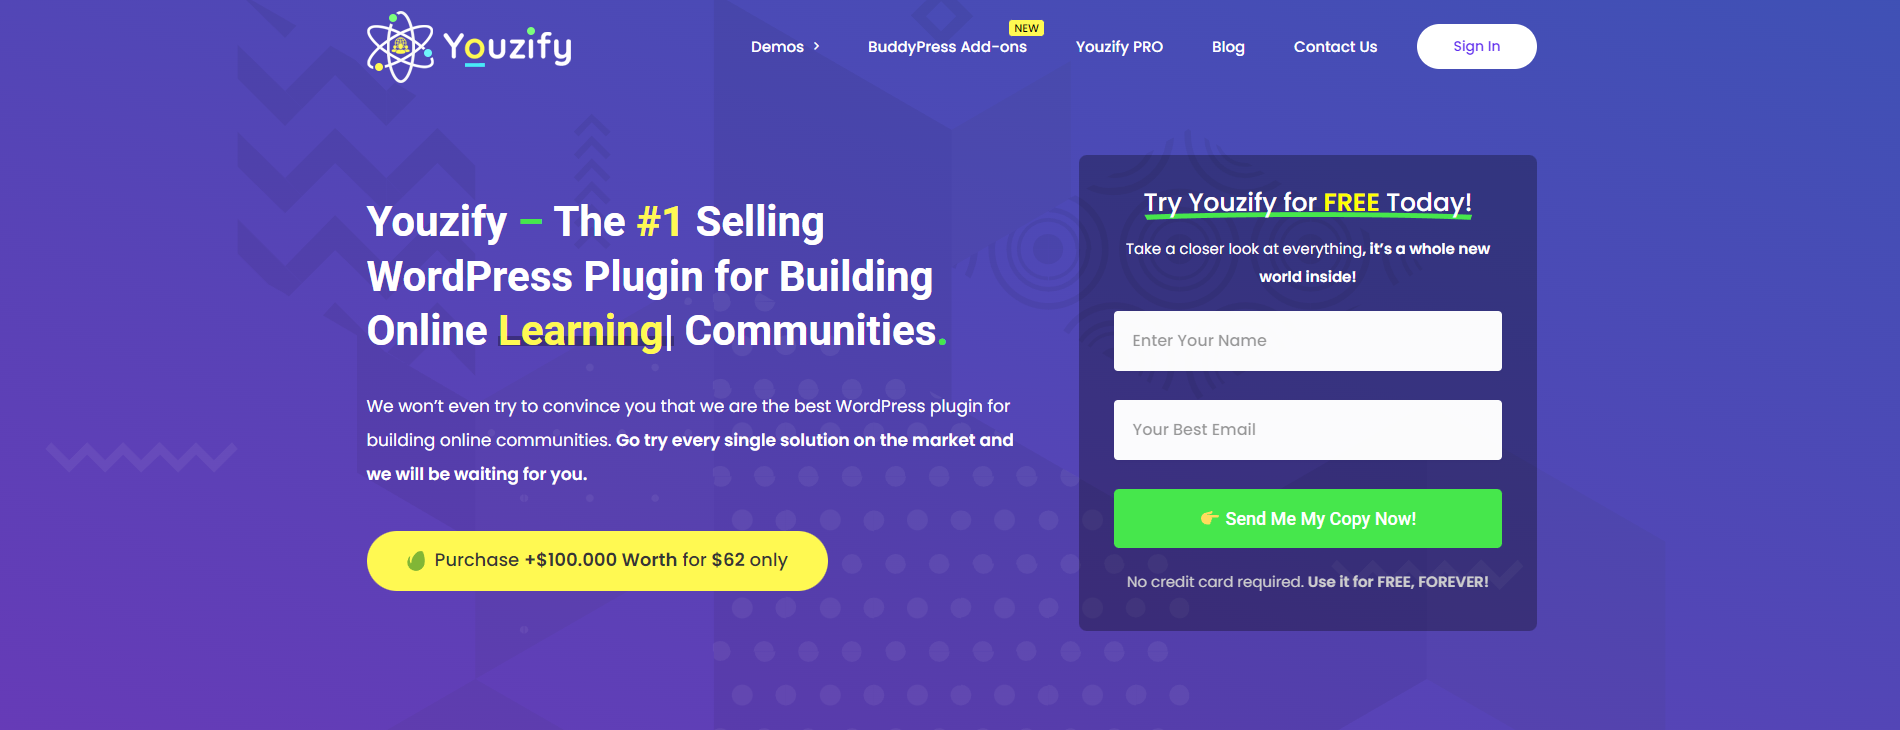 youzify - Best Community Plugin for WordPress 